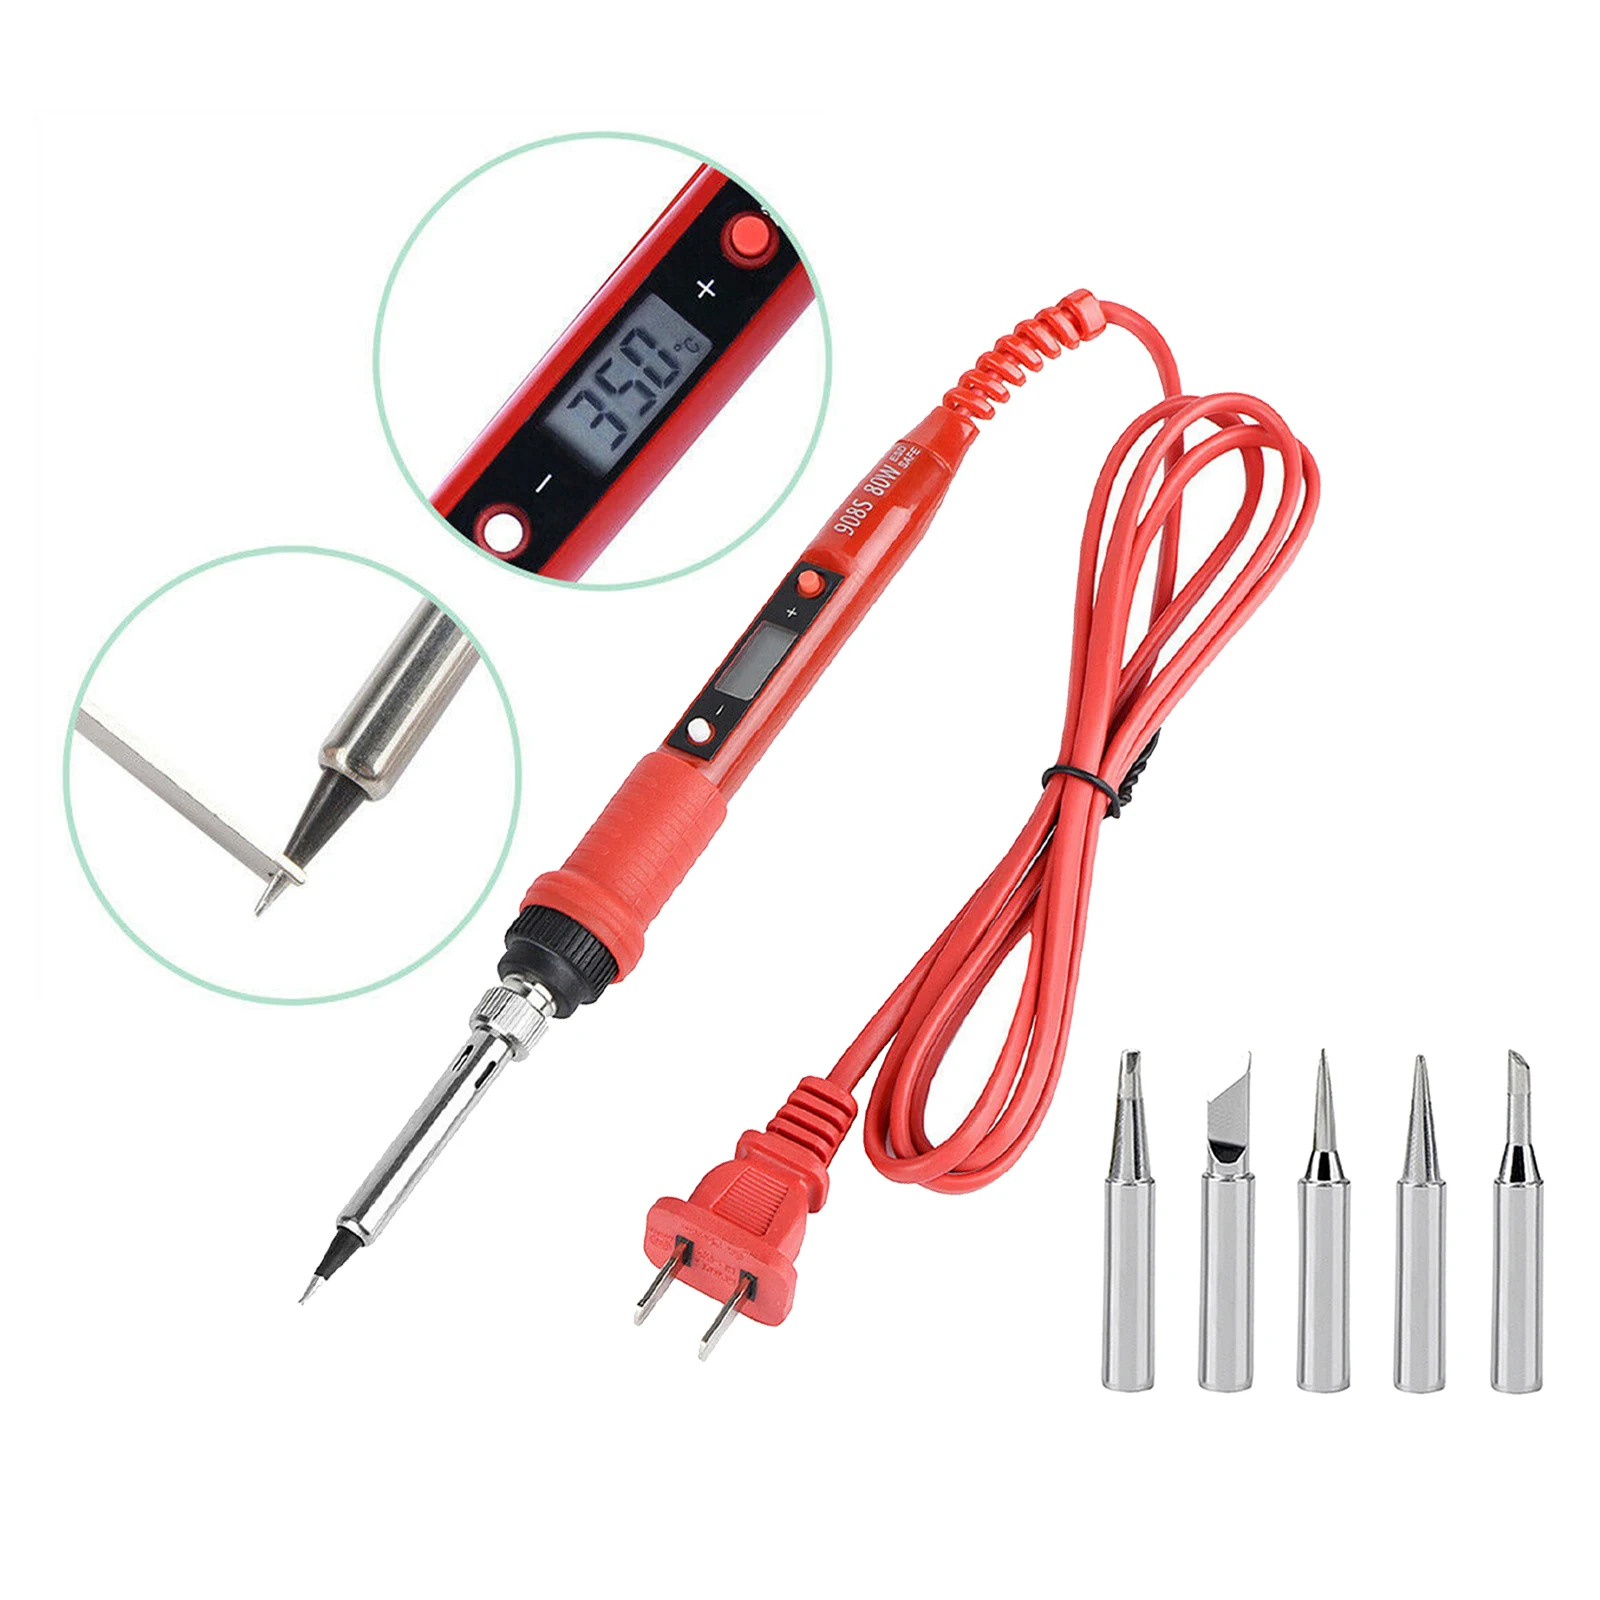 Electric Soldering Iron Kit with 5 Solder Tips Digital Solder Gun for DIY Hobby Projectsm Jewelry Repairing, US Plug